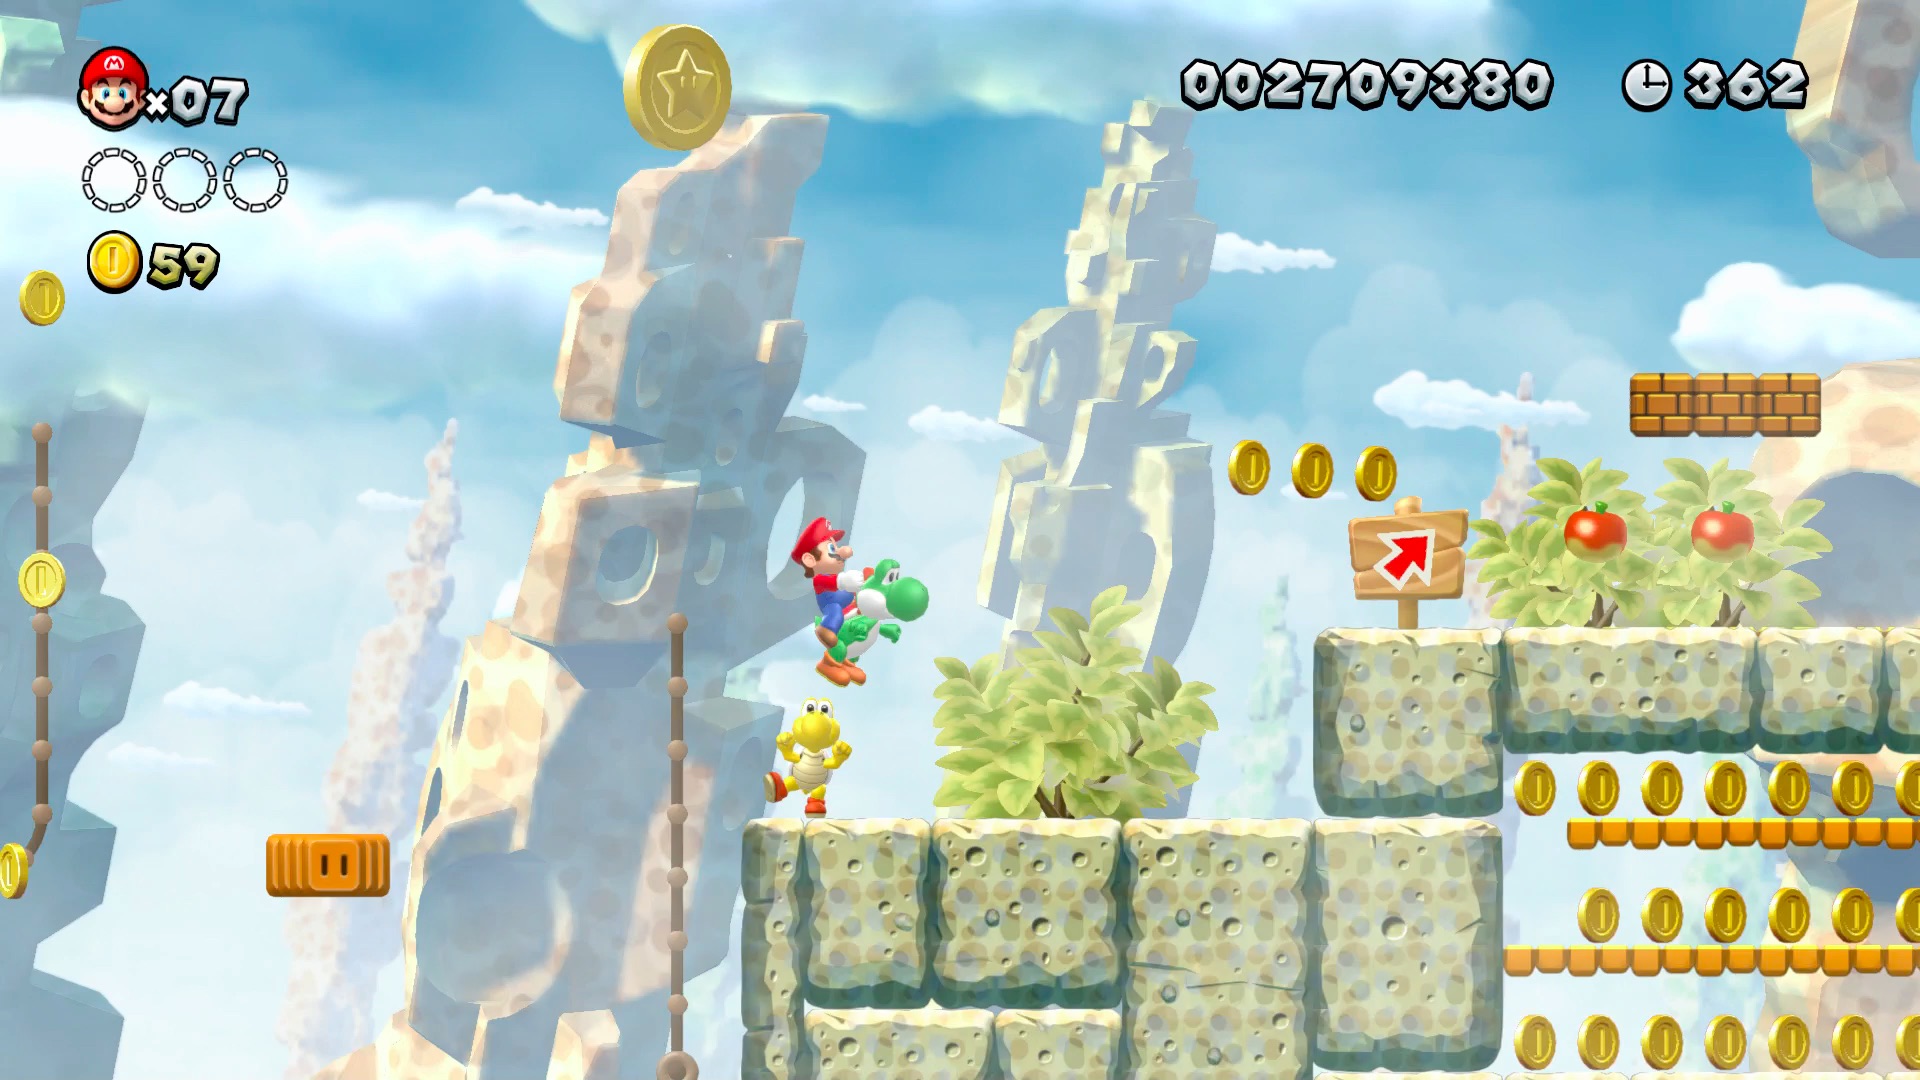 New Super Mario Bros. U Deluxe, Análise